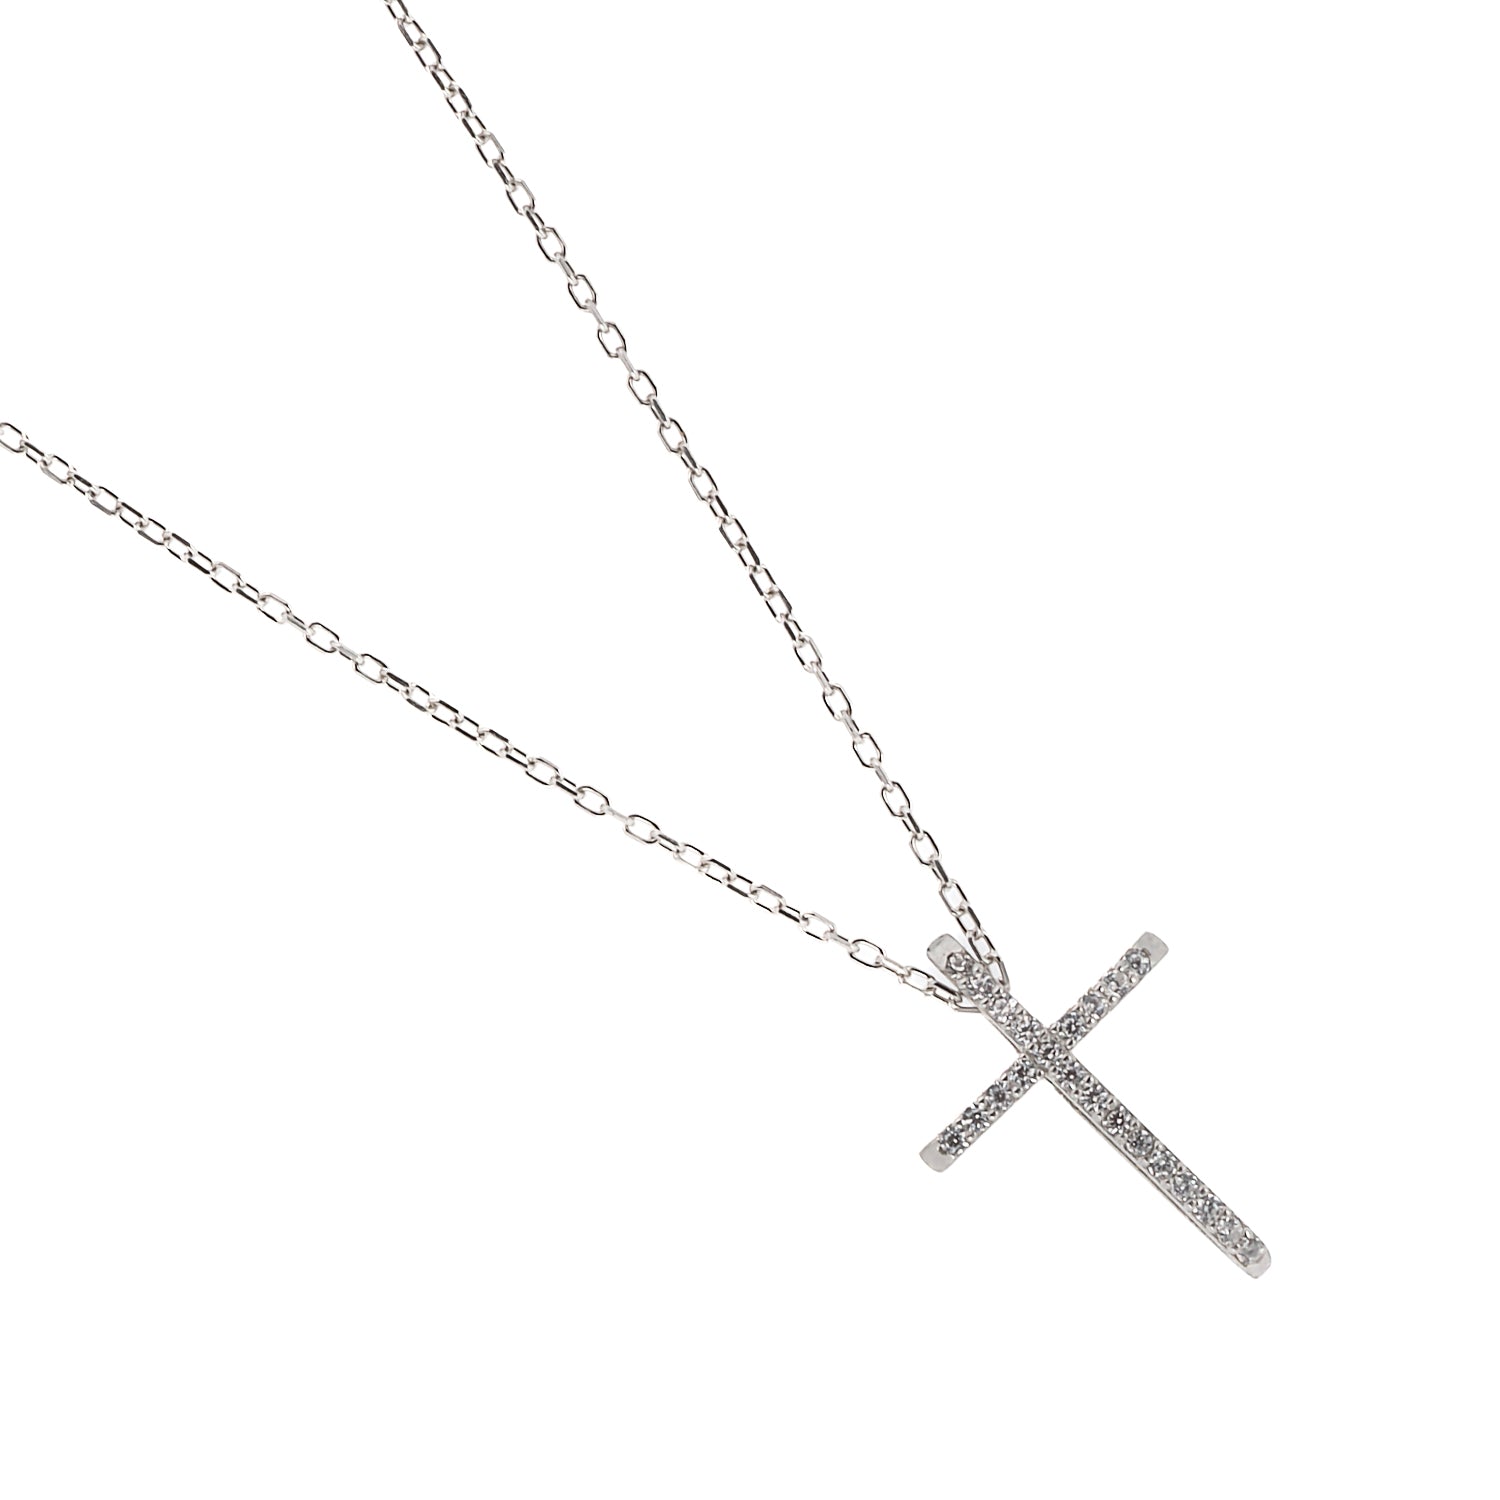 A detailed shot of the CZ diamond-adorned cross pendant on the Unique Cross Diamond Necklace.